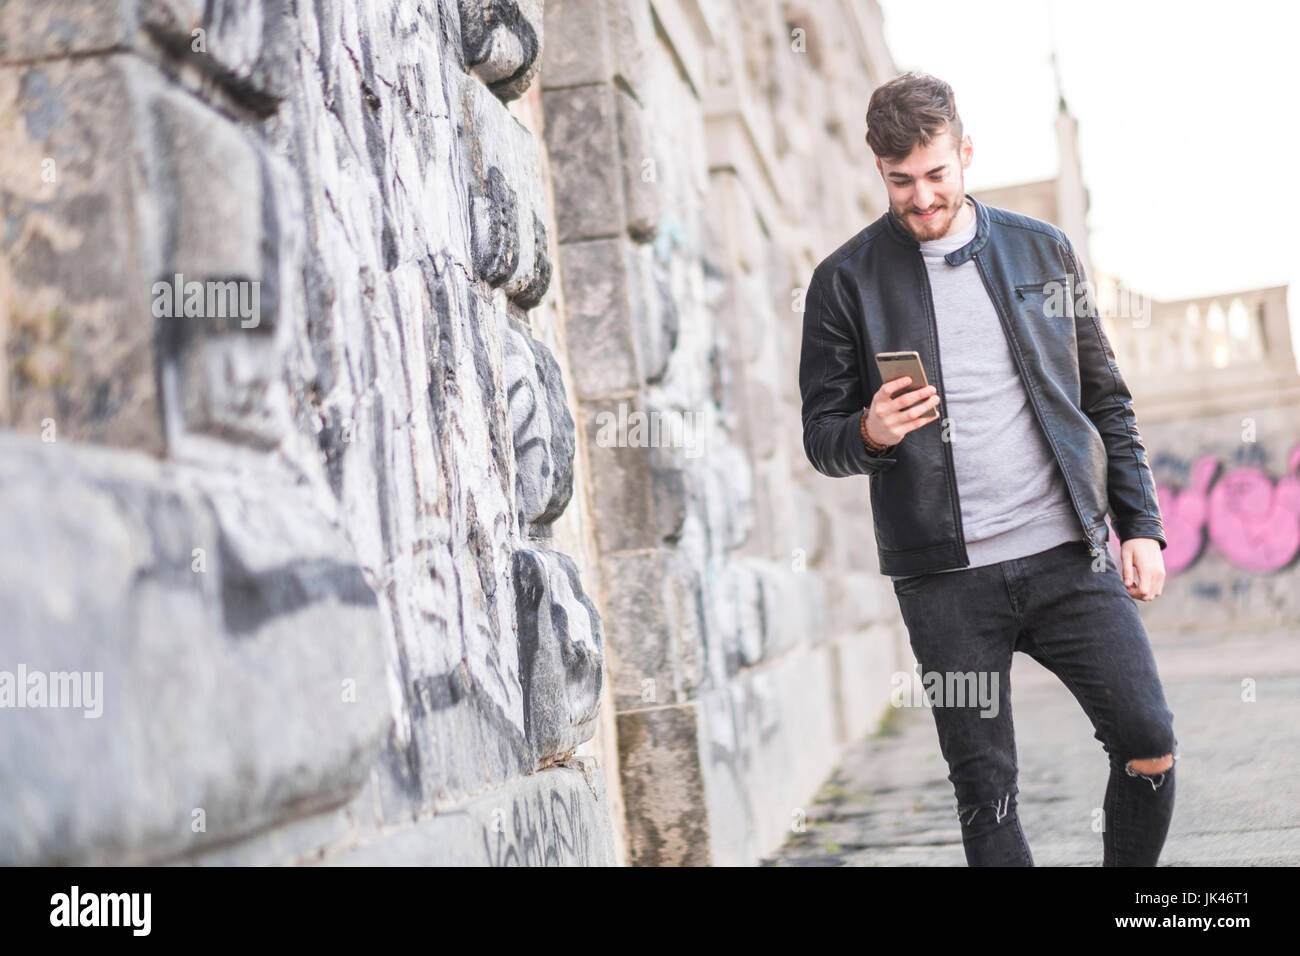 Smiling Caucasian man walking on sidewalk texting on cell phone Stock Photo